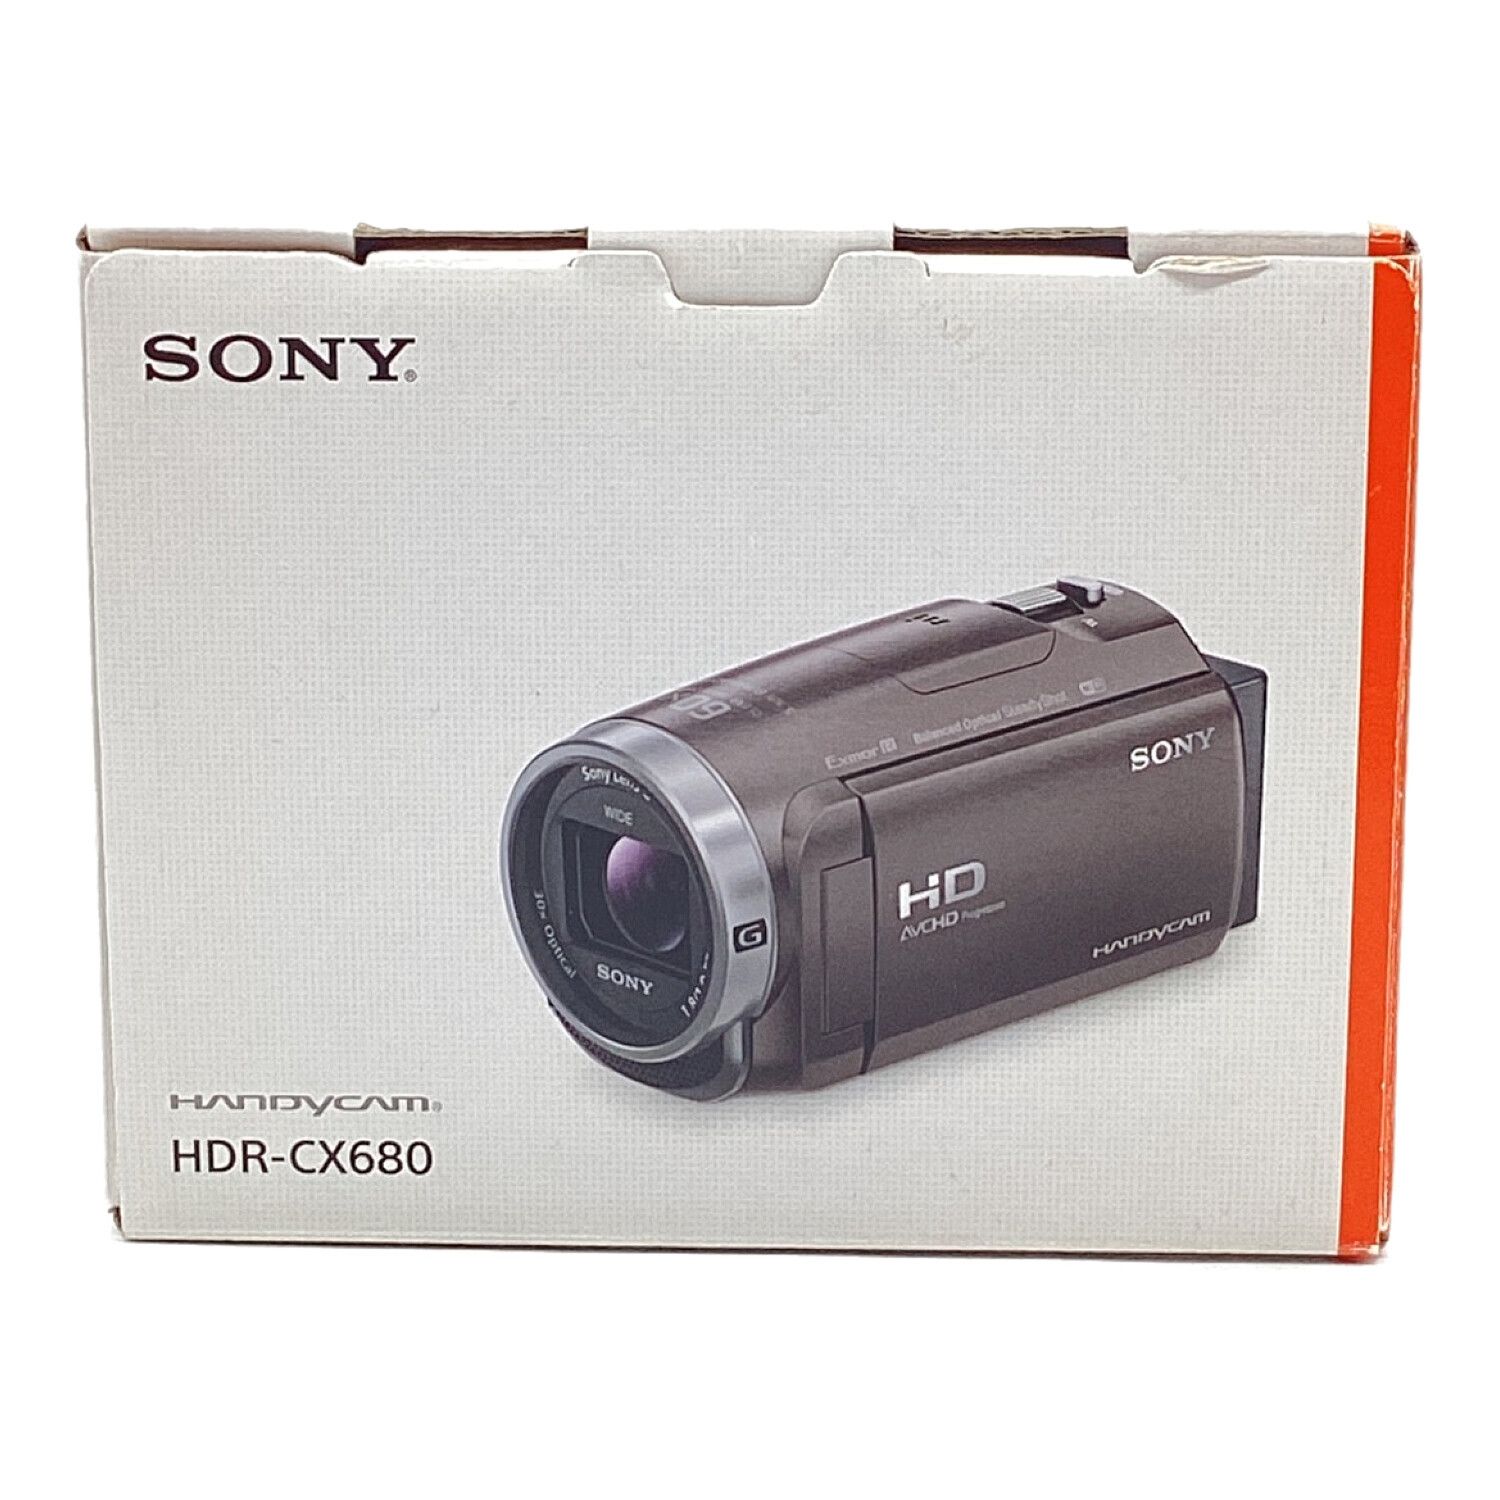 SONY (ソニー) デジタルビデオカメラ HANDYCAM 920万画素 64GB HDR 